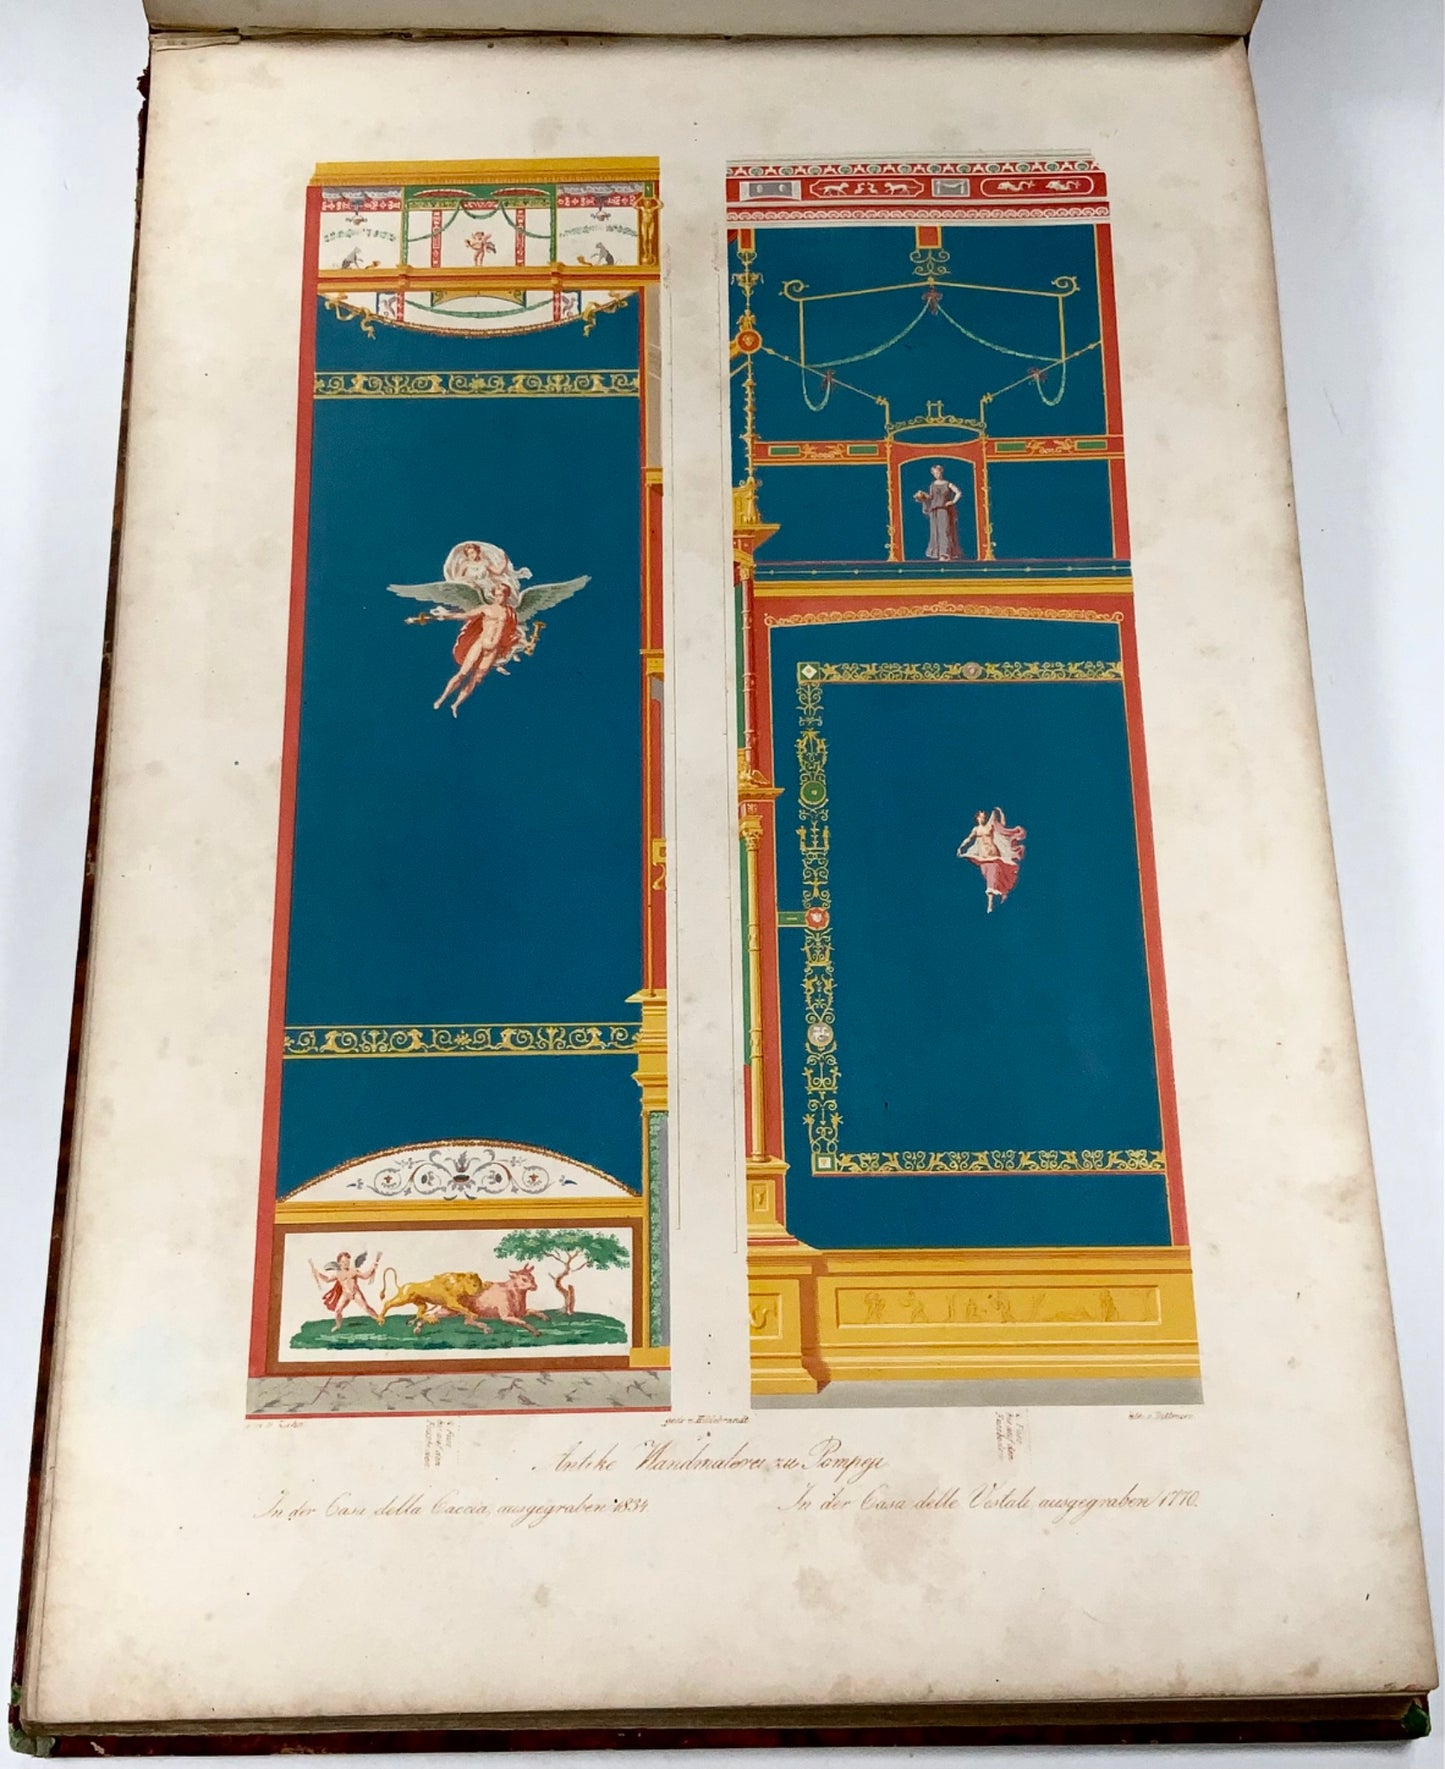 1848 Wm Zahn, Fine folio book on Pompeian wall painting, 50 colour lithographs